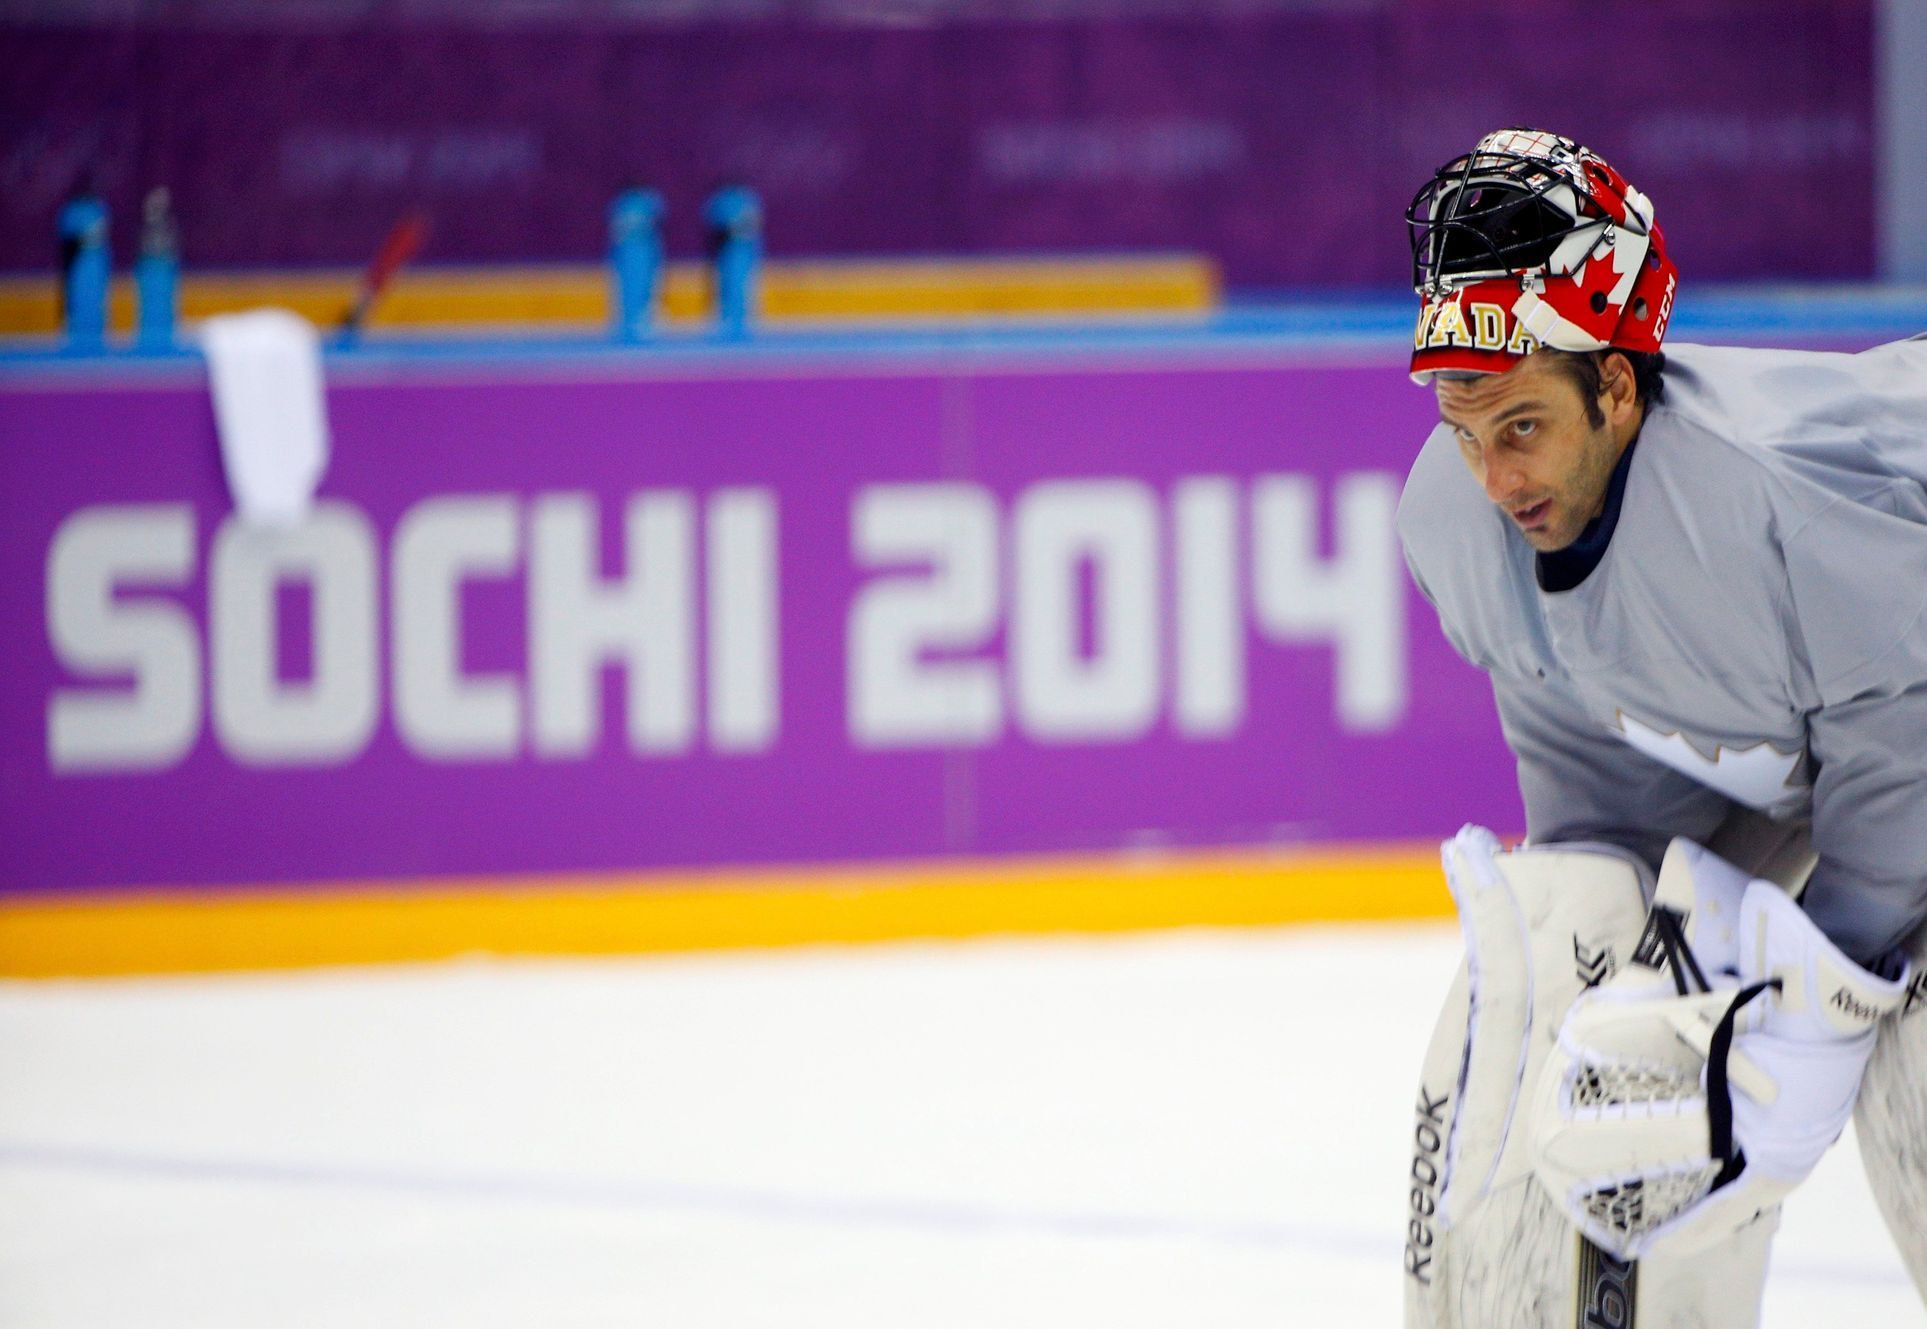 Soči 2014, hokej, Kanada: Roberto Luongo